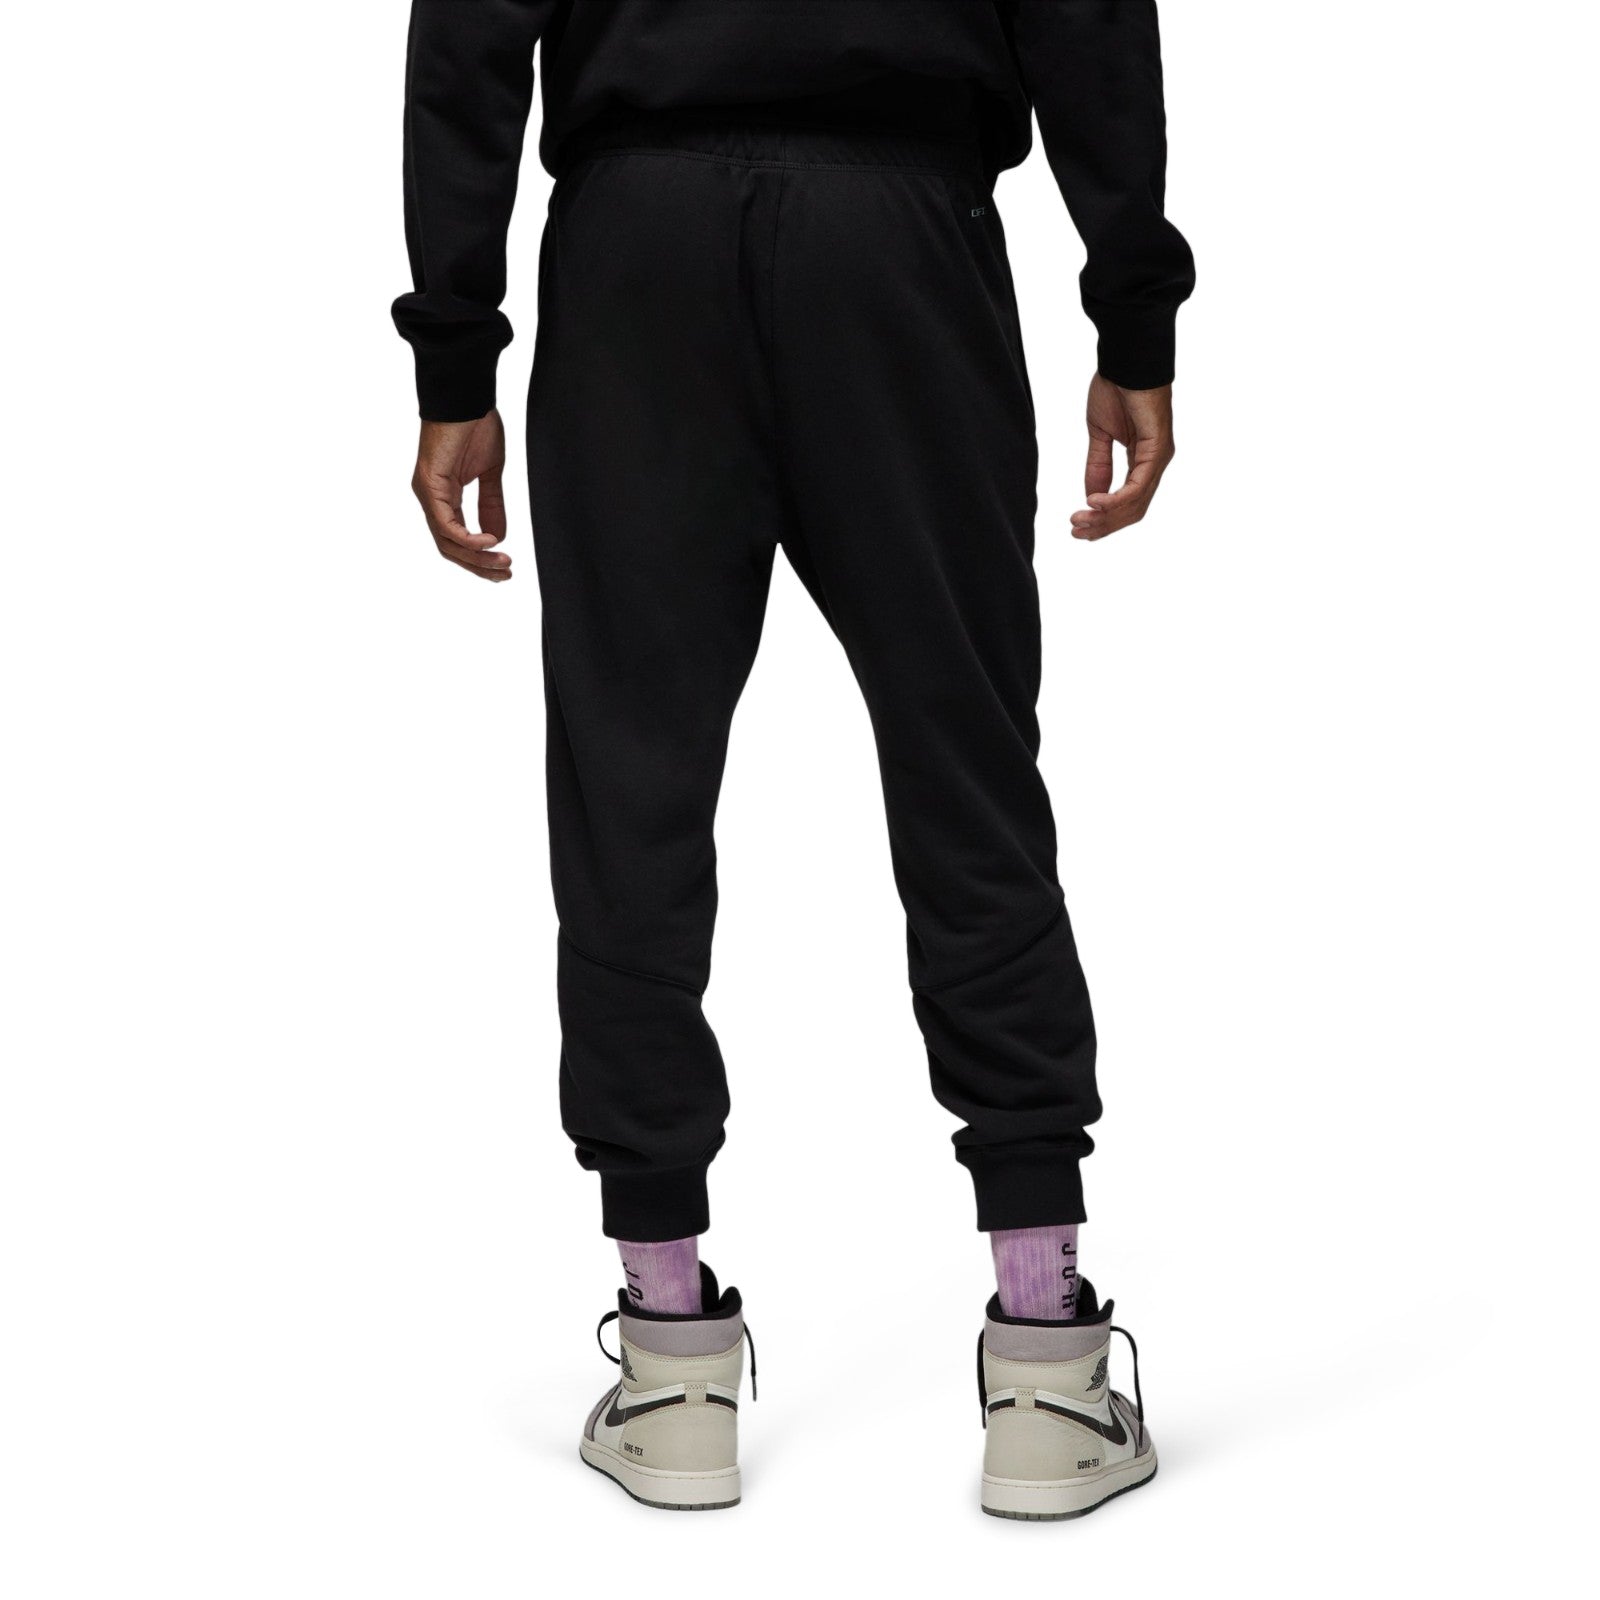 Jordan Dri-FIT Sport Men's Fleece Pants DQ7332-010